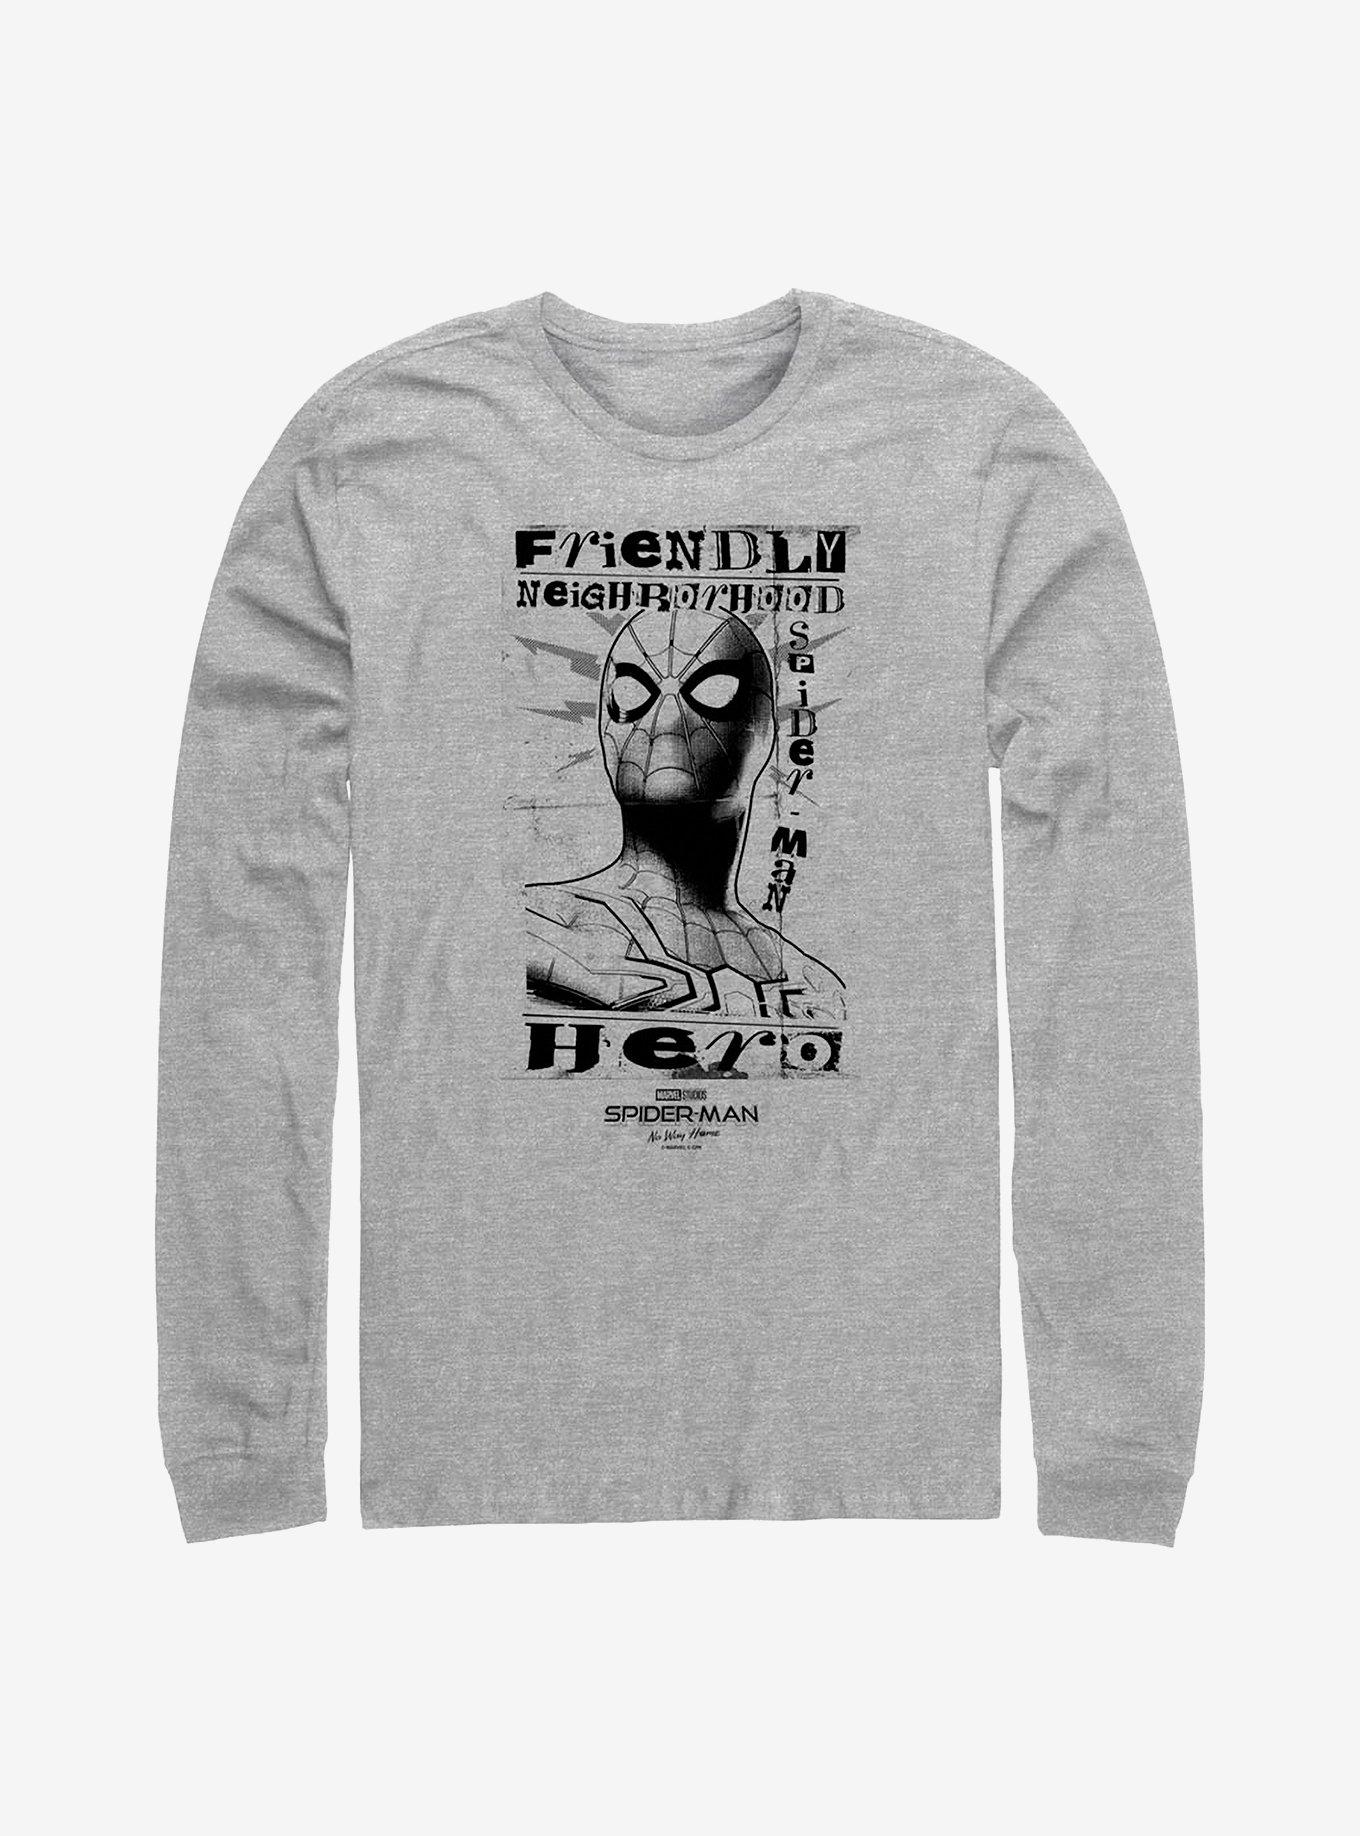 Marvel Spider-Man Friendly Neighborhood Hero Long-Sleeve T-Shirt